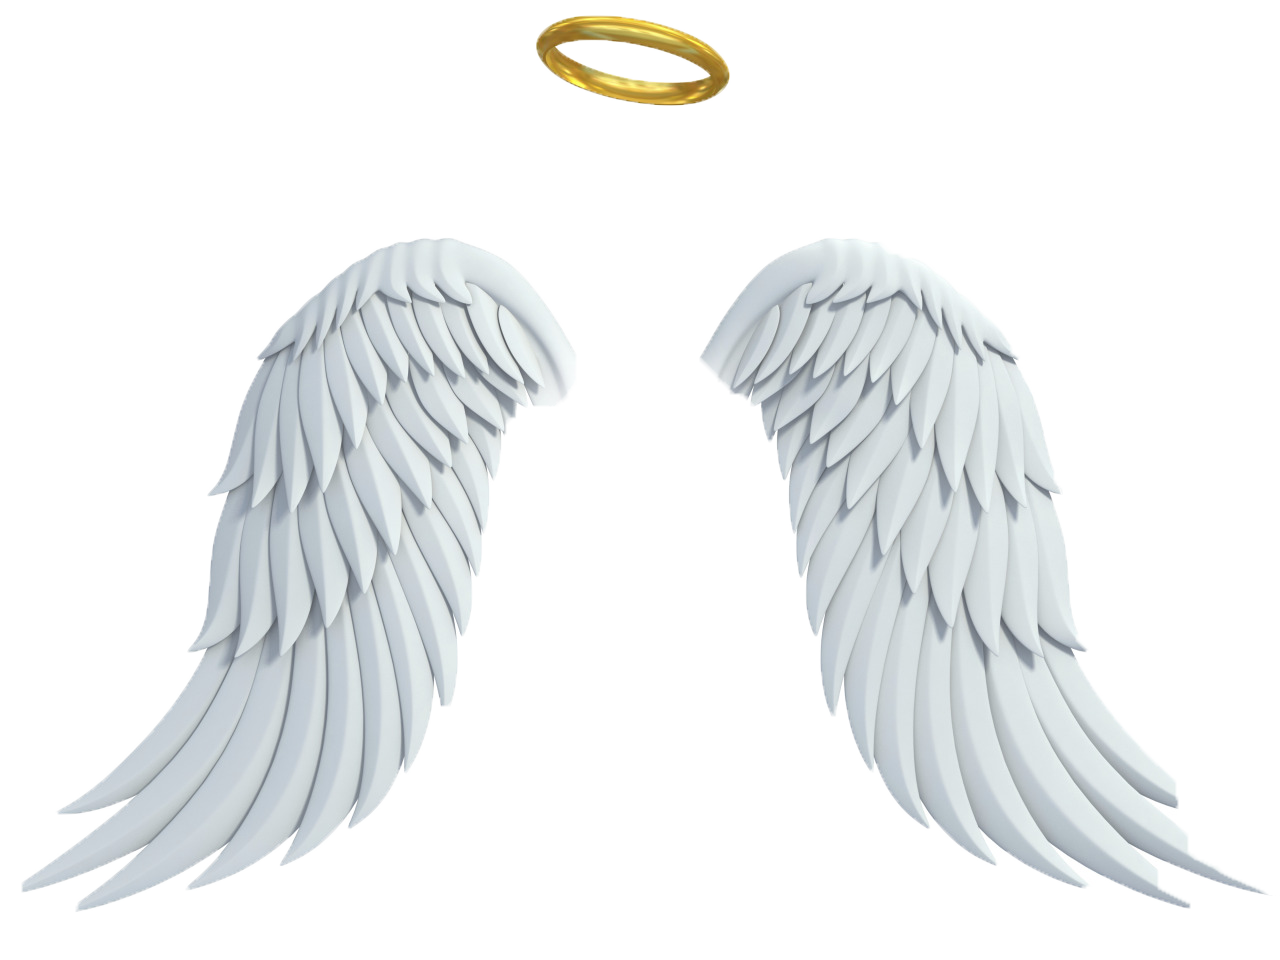 Angel Halo PNG Free Image